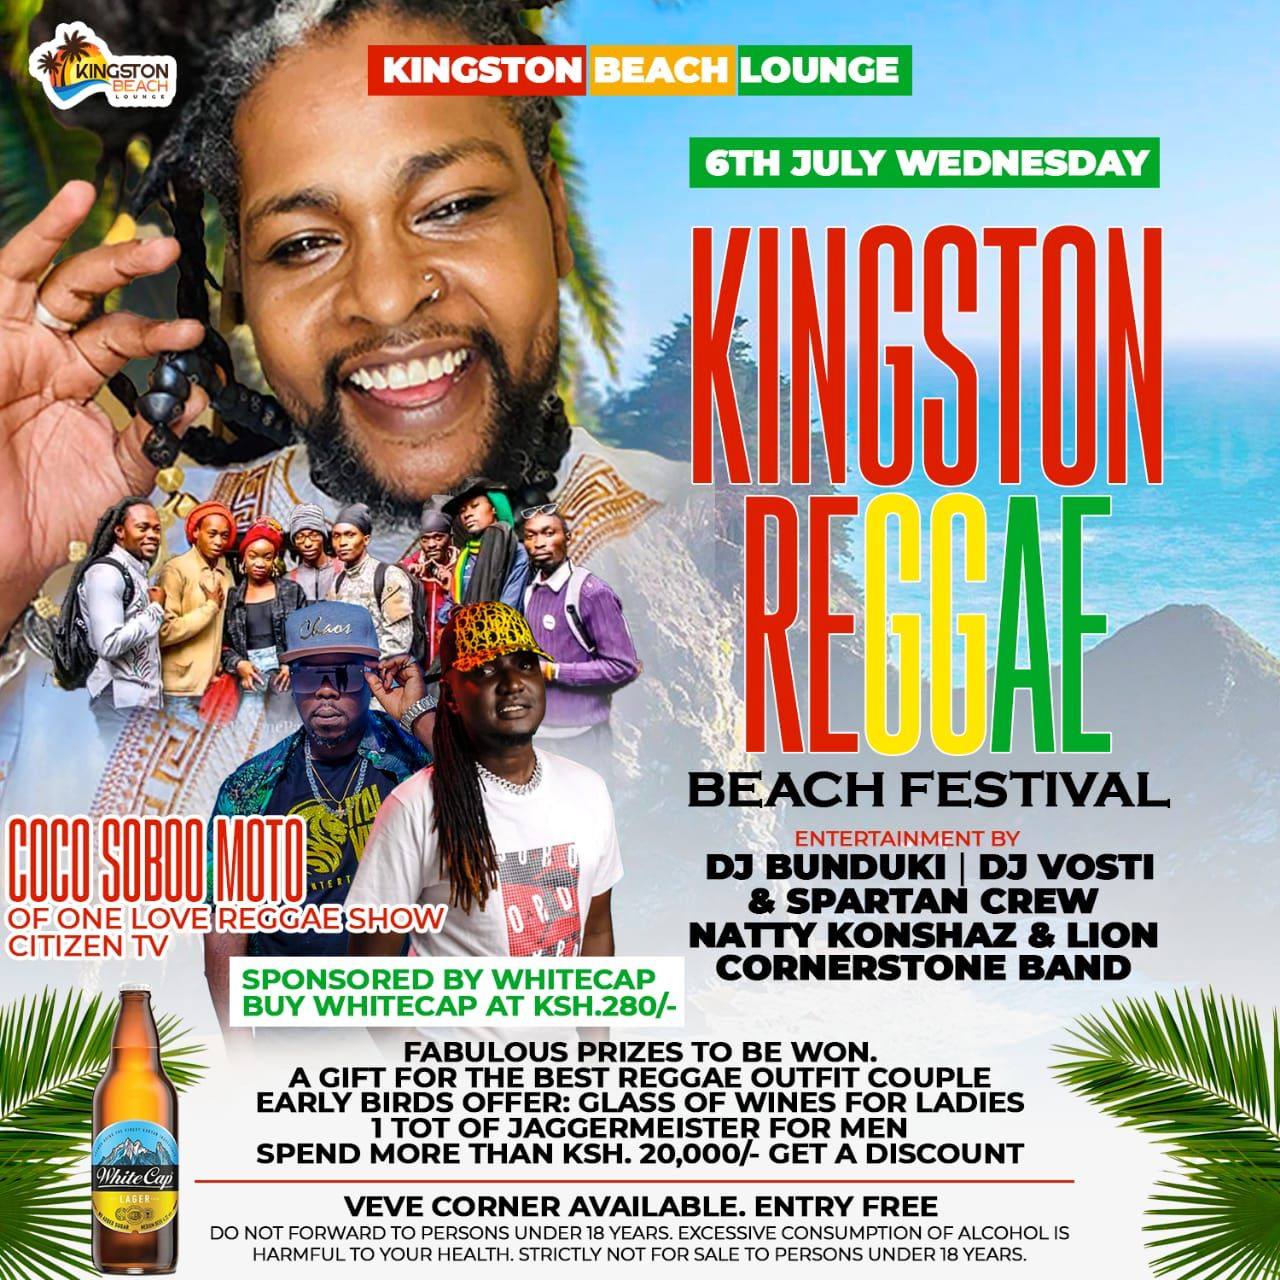 KINGSTON REGGAE BEACH FESTIVAL 6th JULY @KINGSTON BEACH LOUNGE